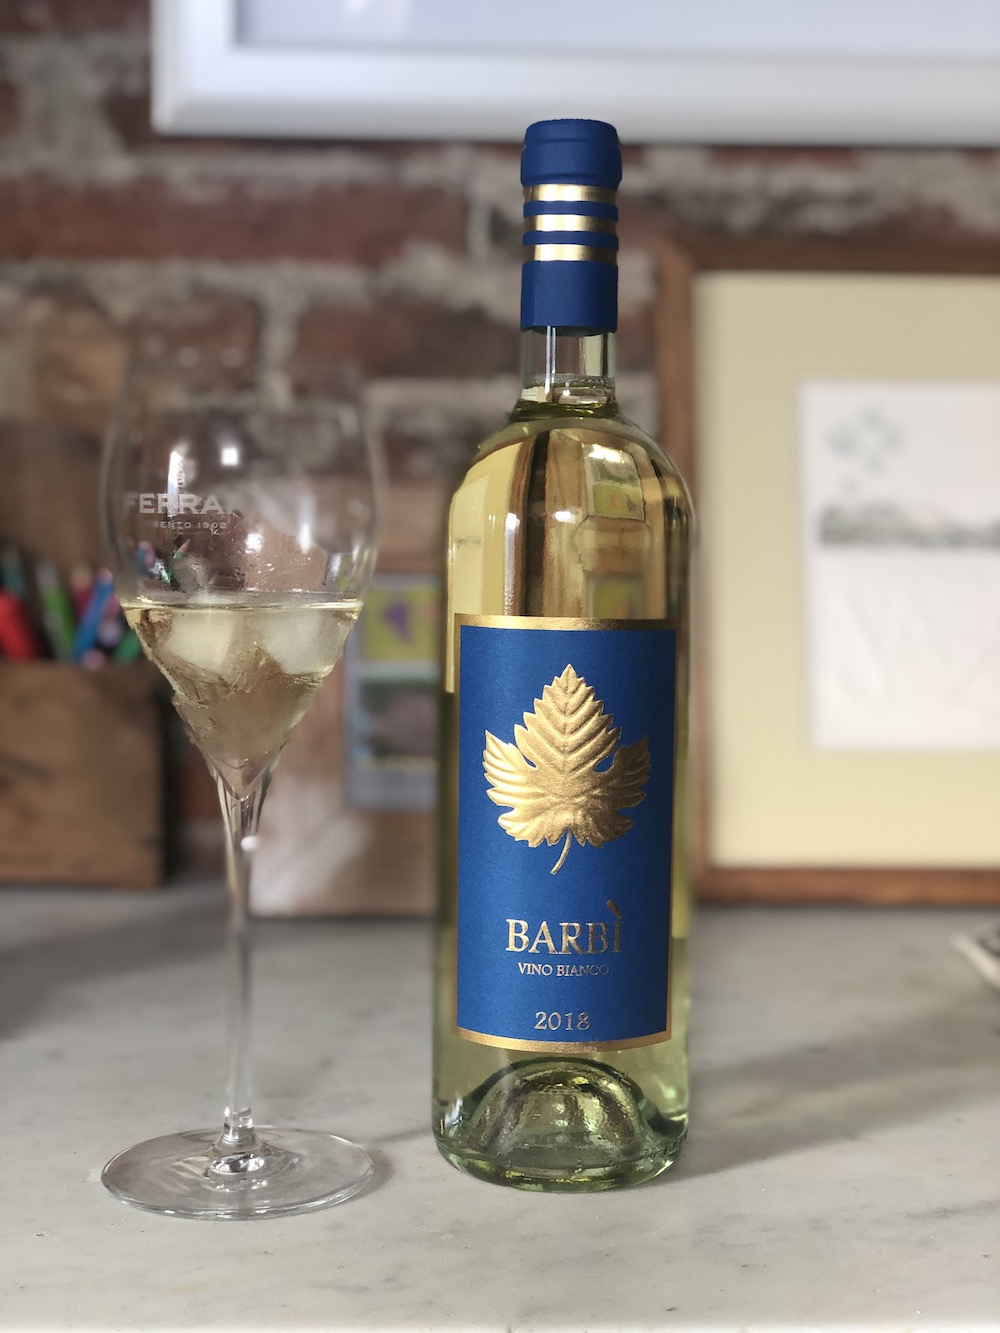 Bottle of white wine Barbì